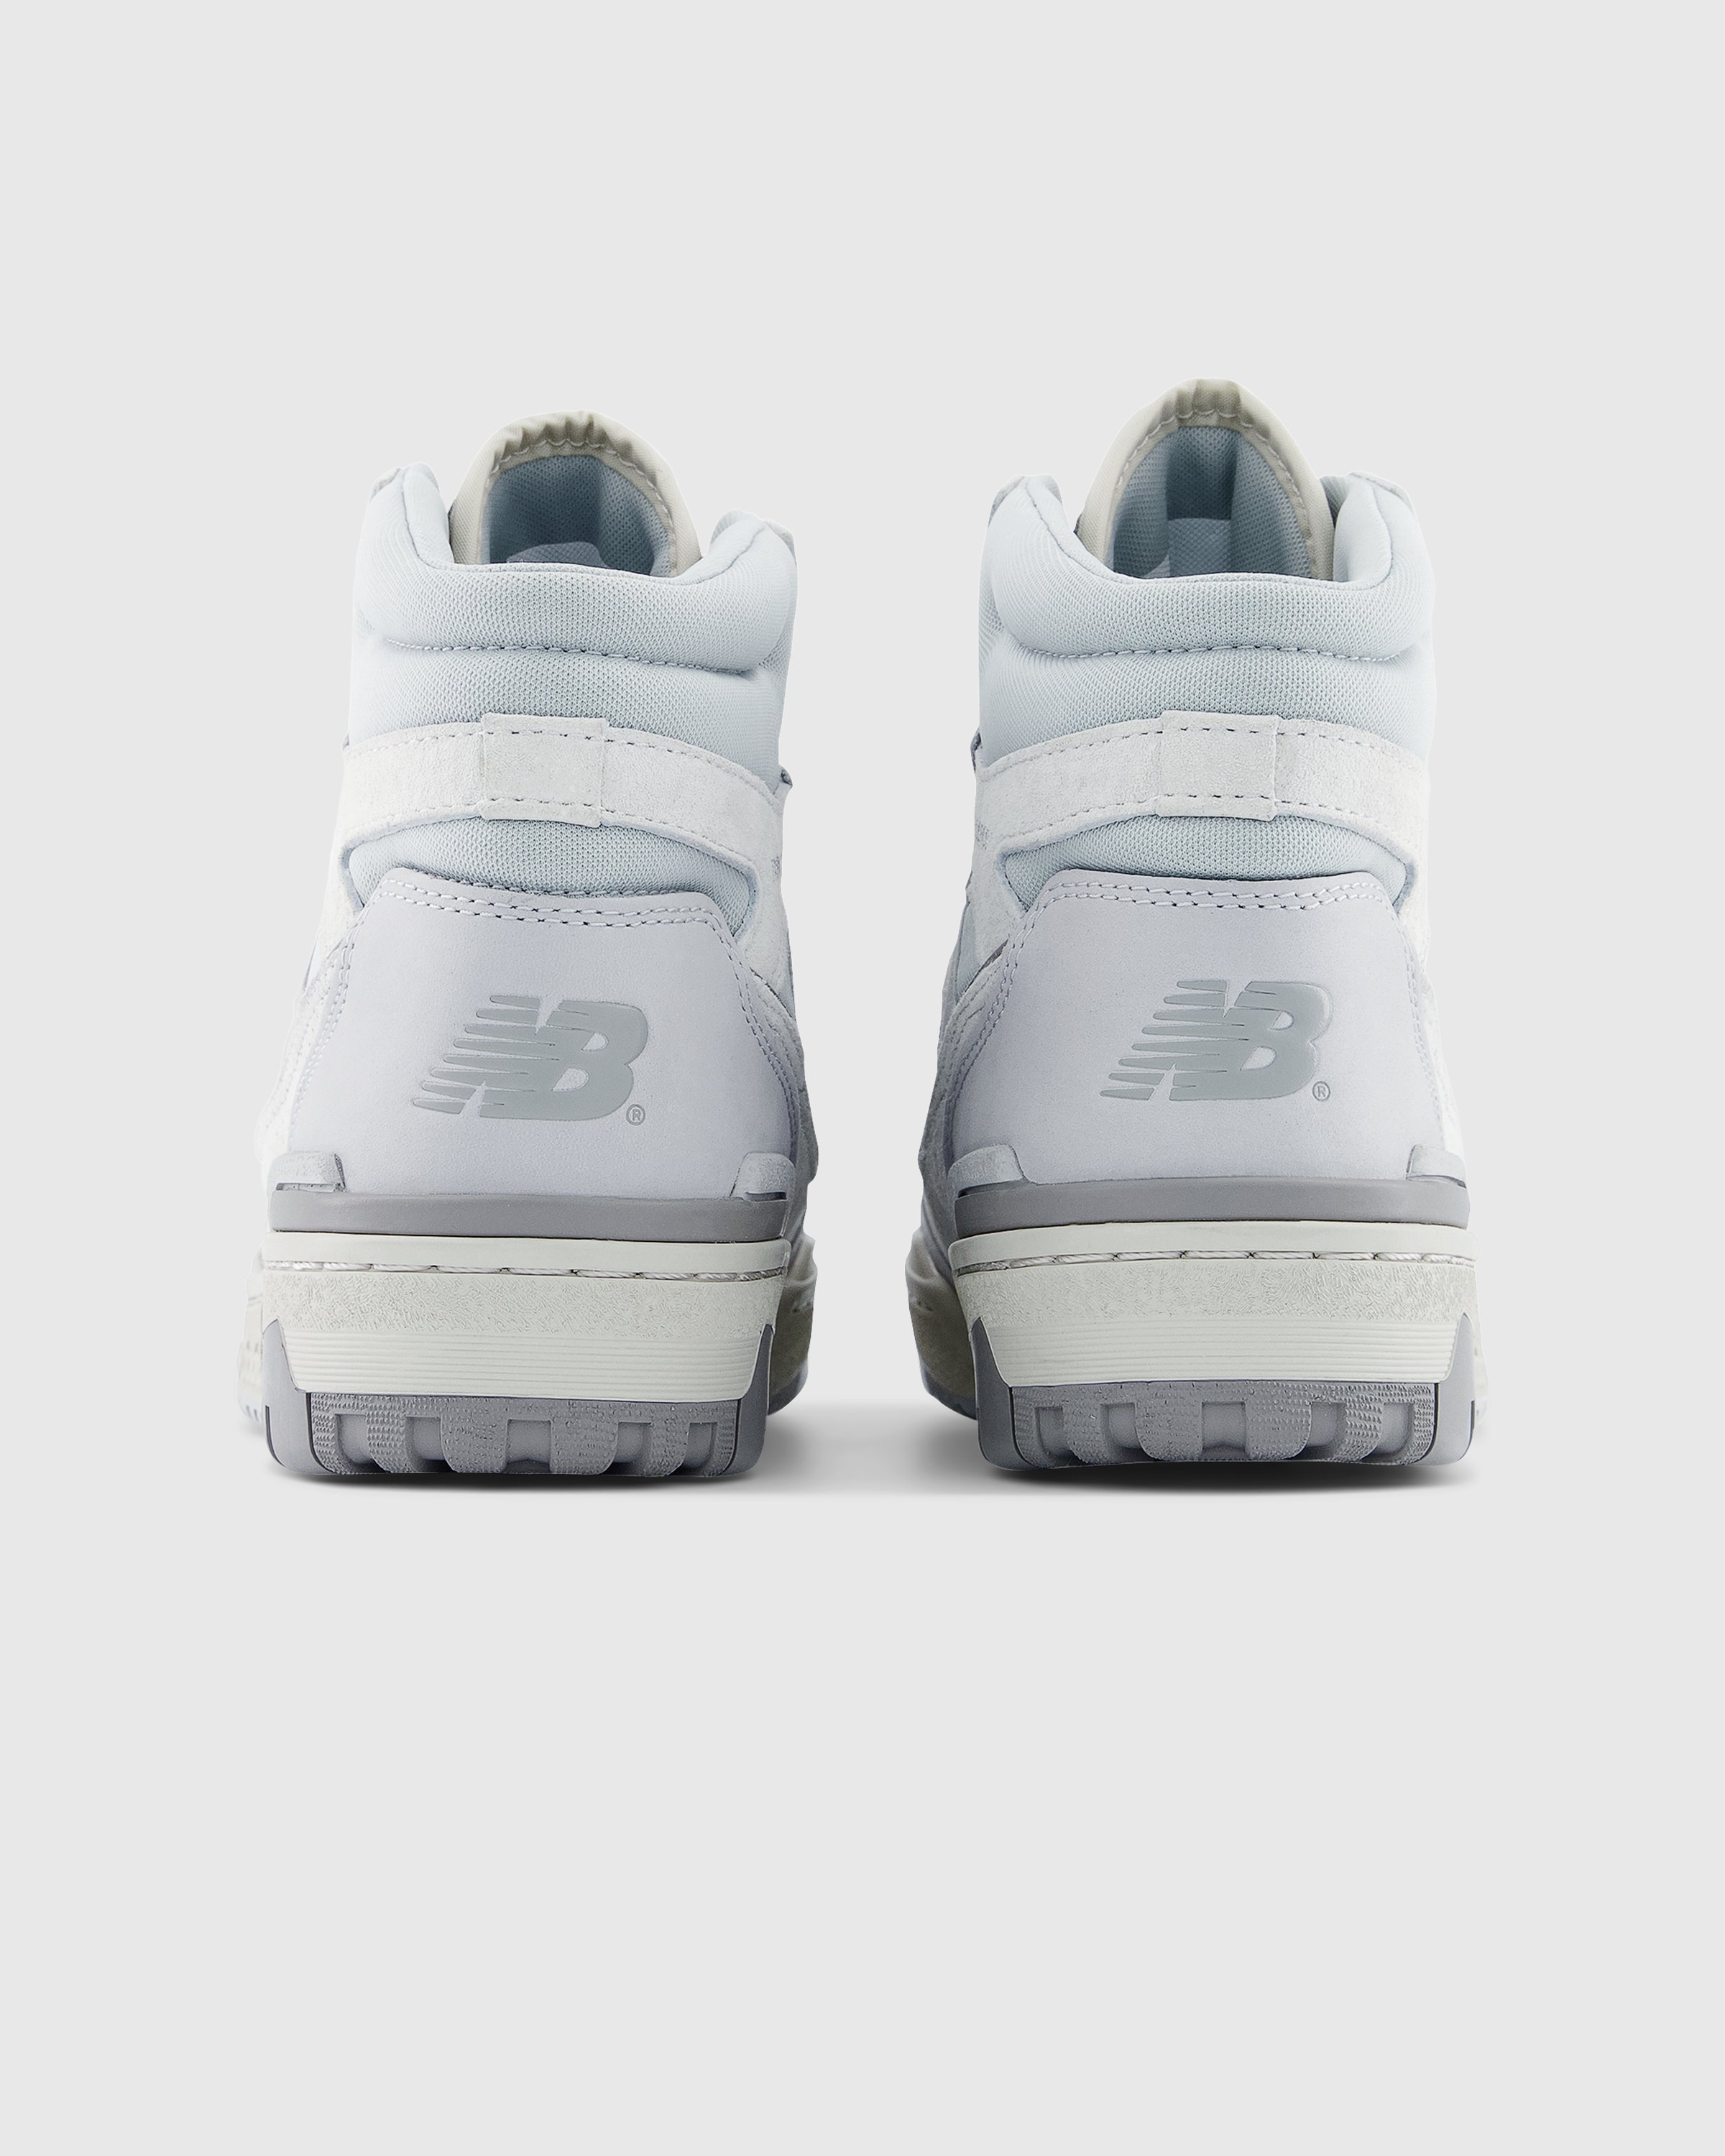 New Balance - BB650RGG Light Aluminum - Footwear - Grey - Image 4